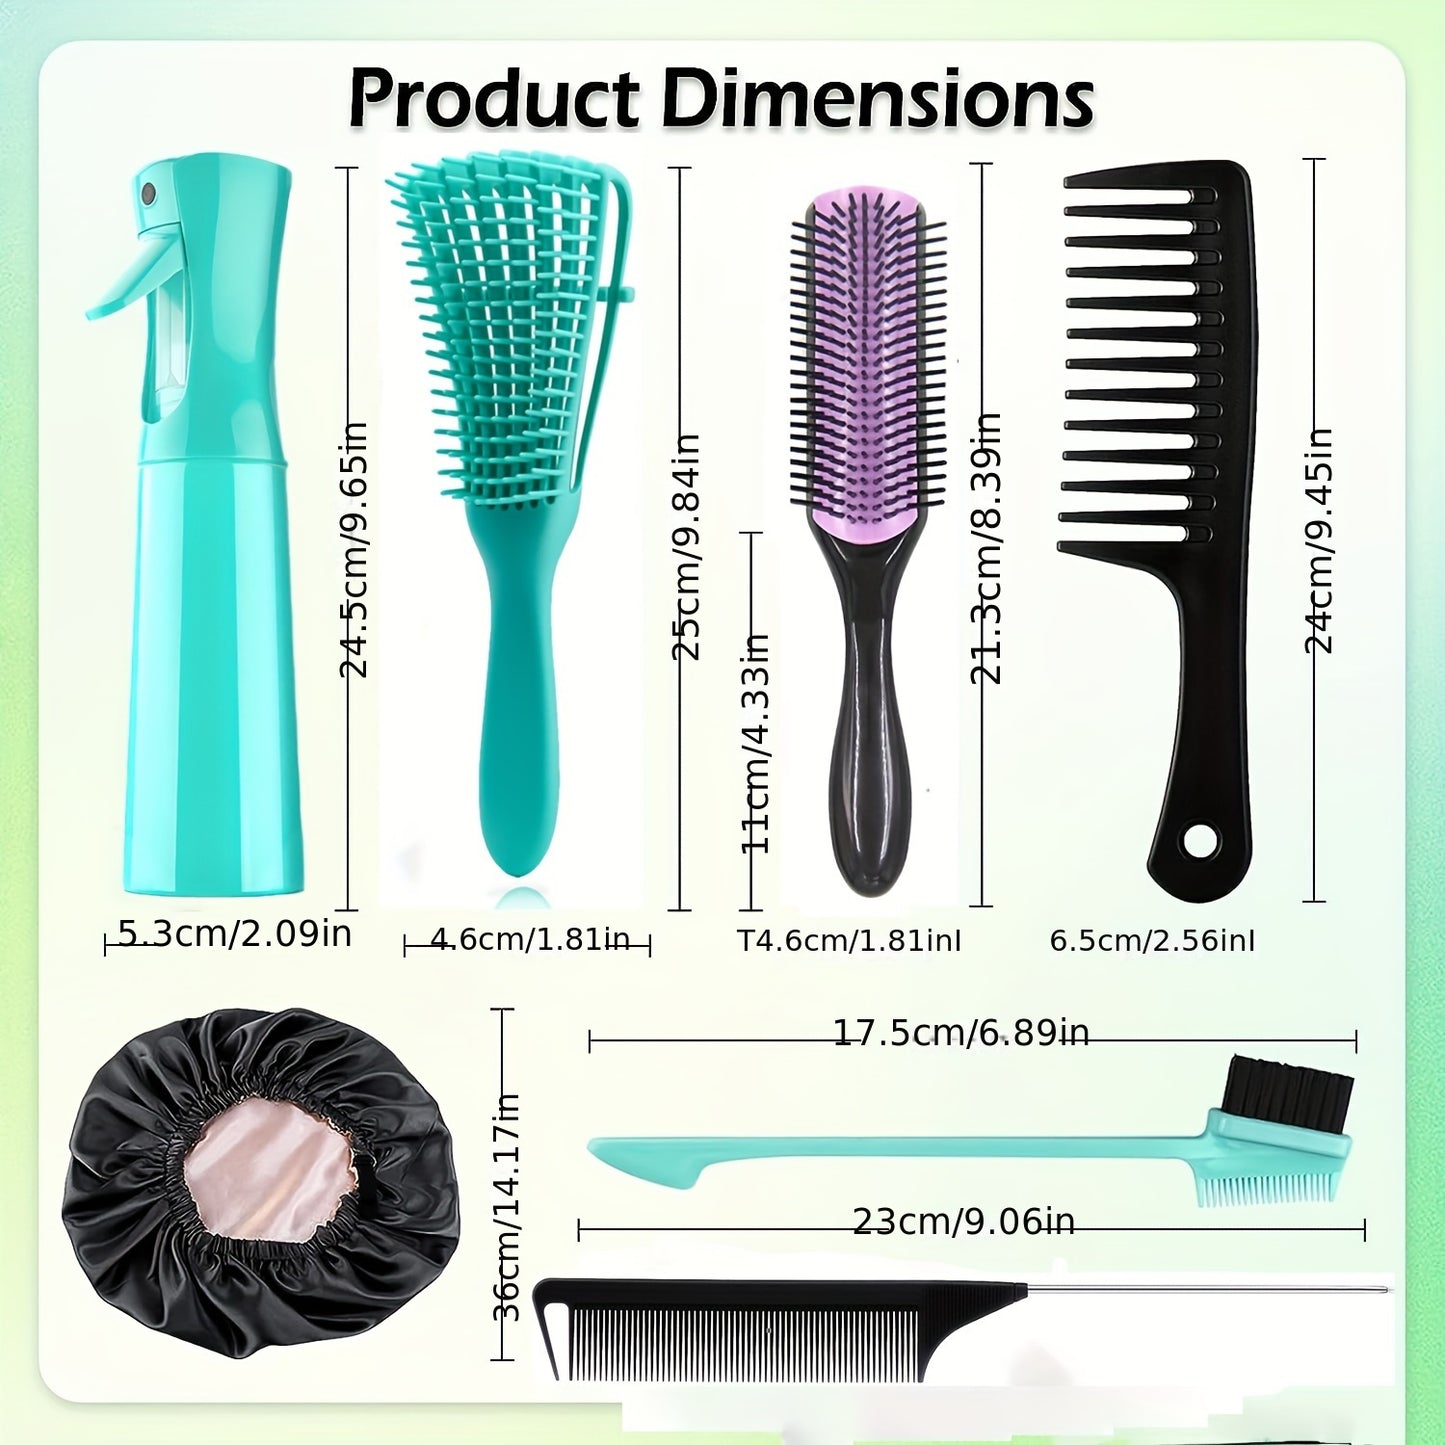 10PCS Detangling Brush Set, Detangling Brush And Comb For Natural Hair, Curly Hair Brush Set With Spray Bottle & Sleep Bonnet, Easier And Faster Detangling On Wash Days